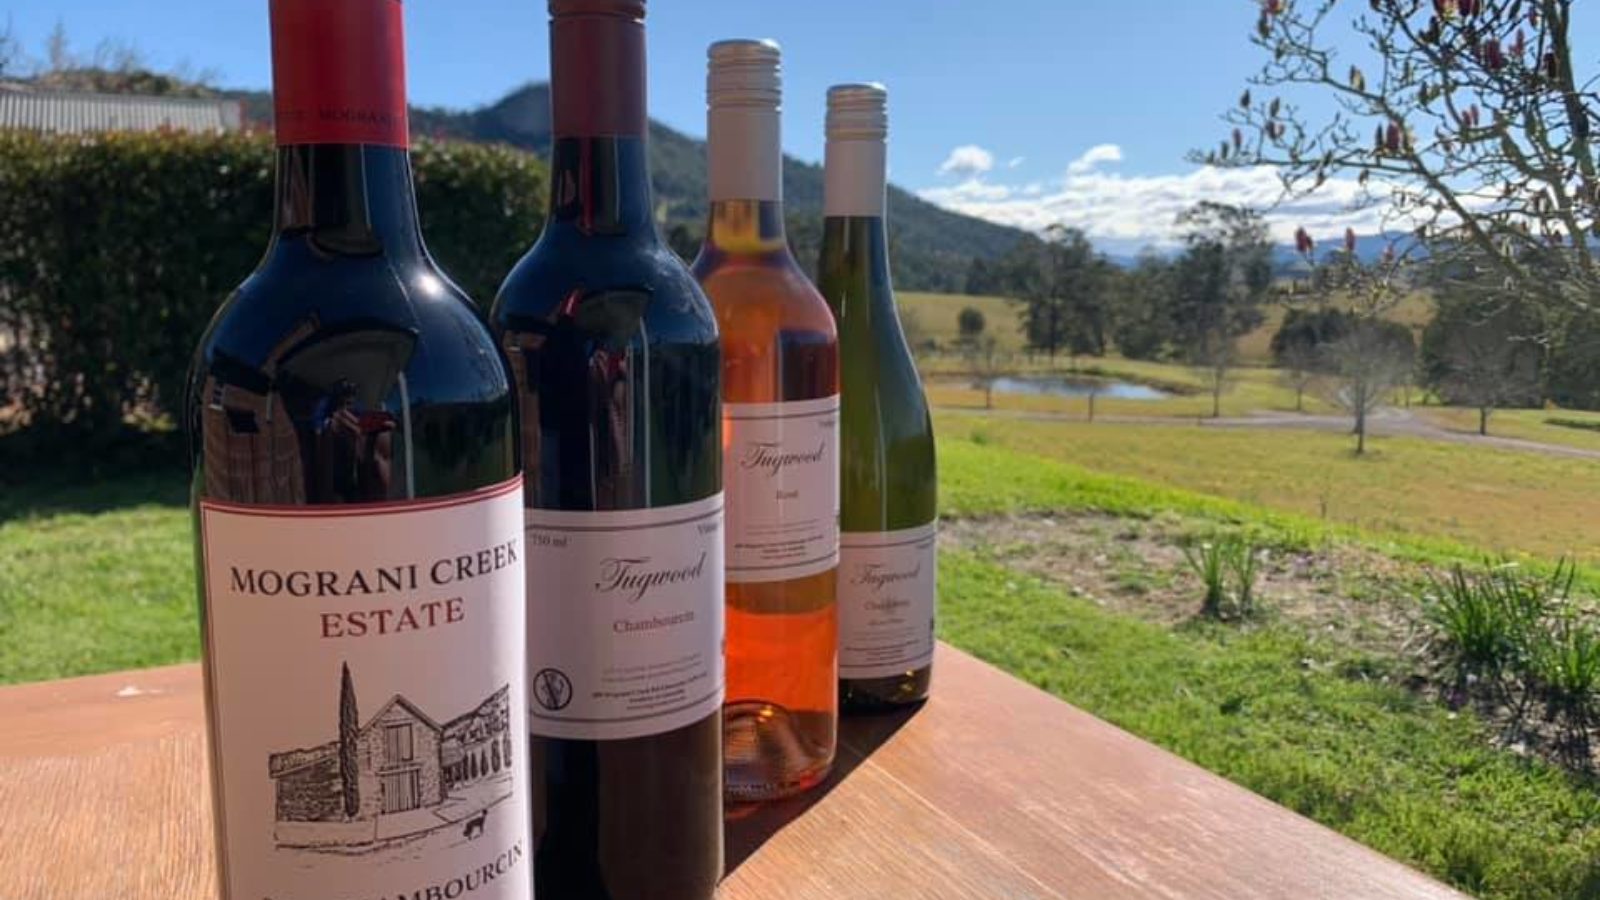 Mograni Creek Estate wine selection with view